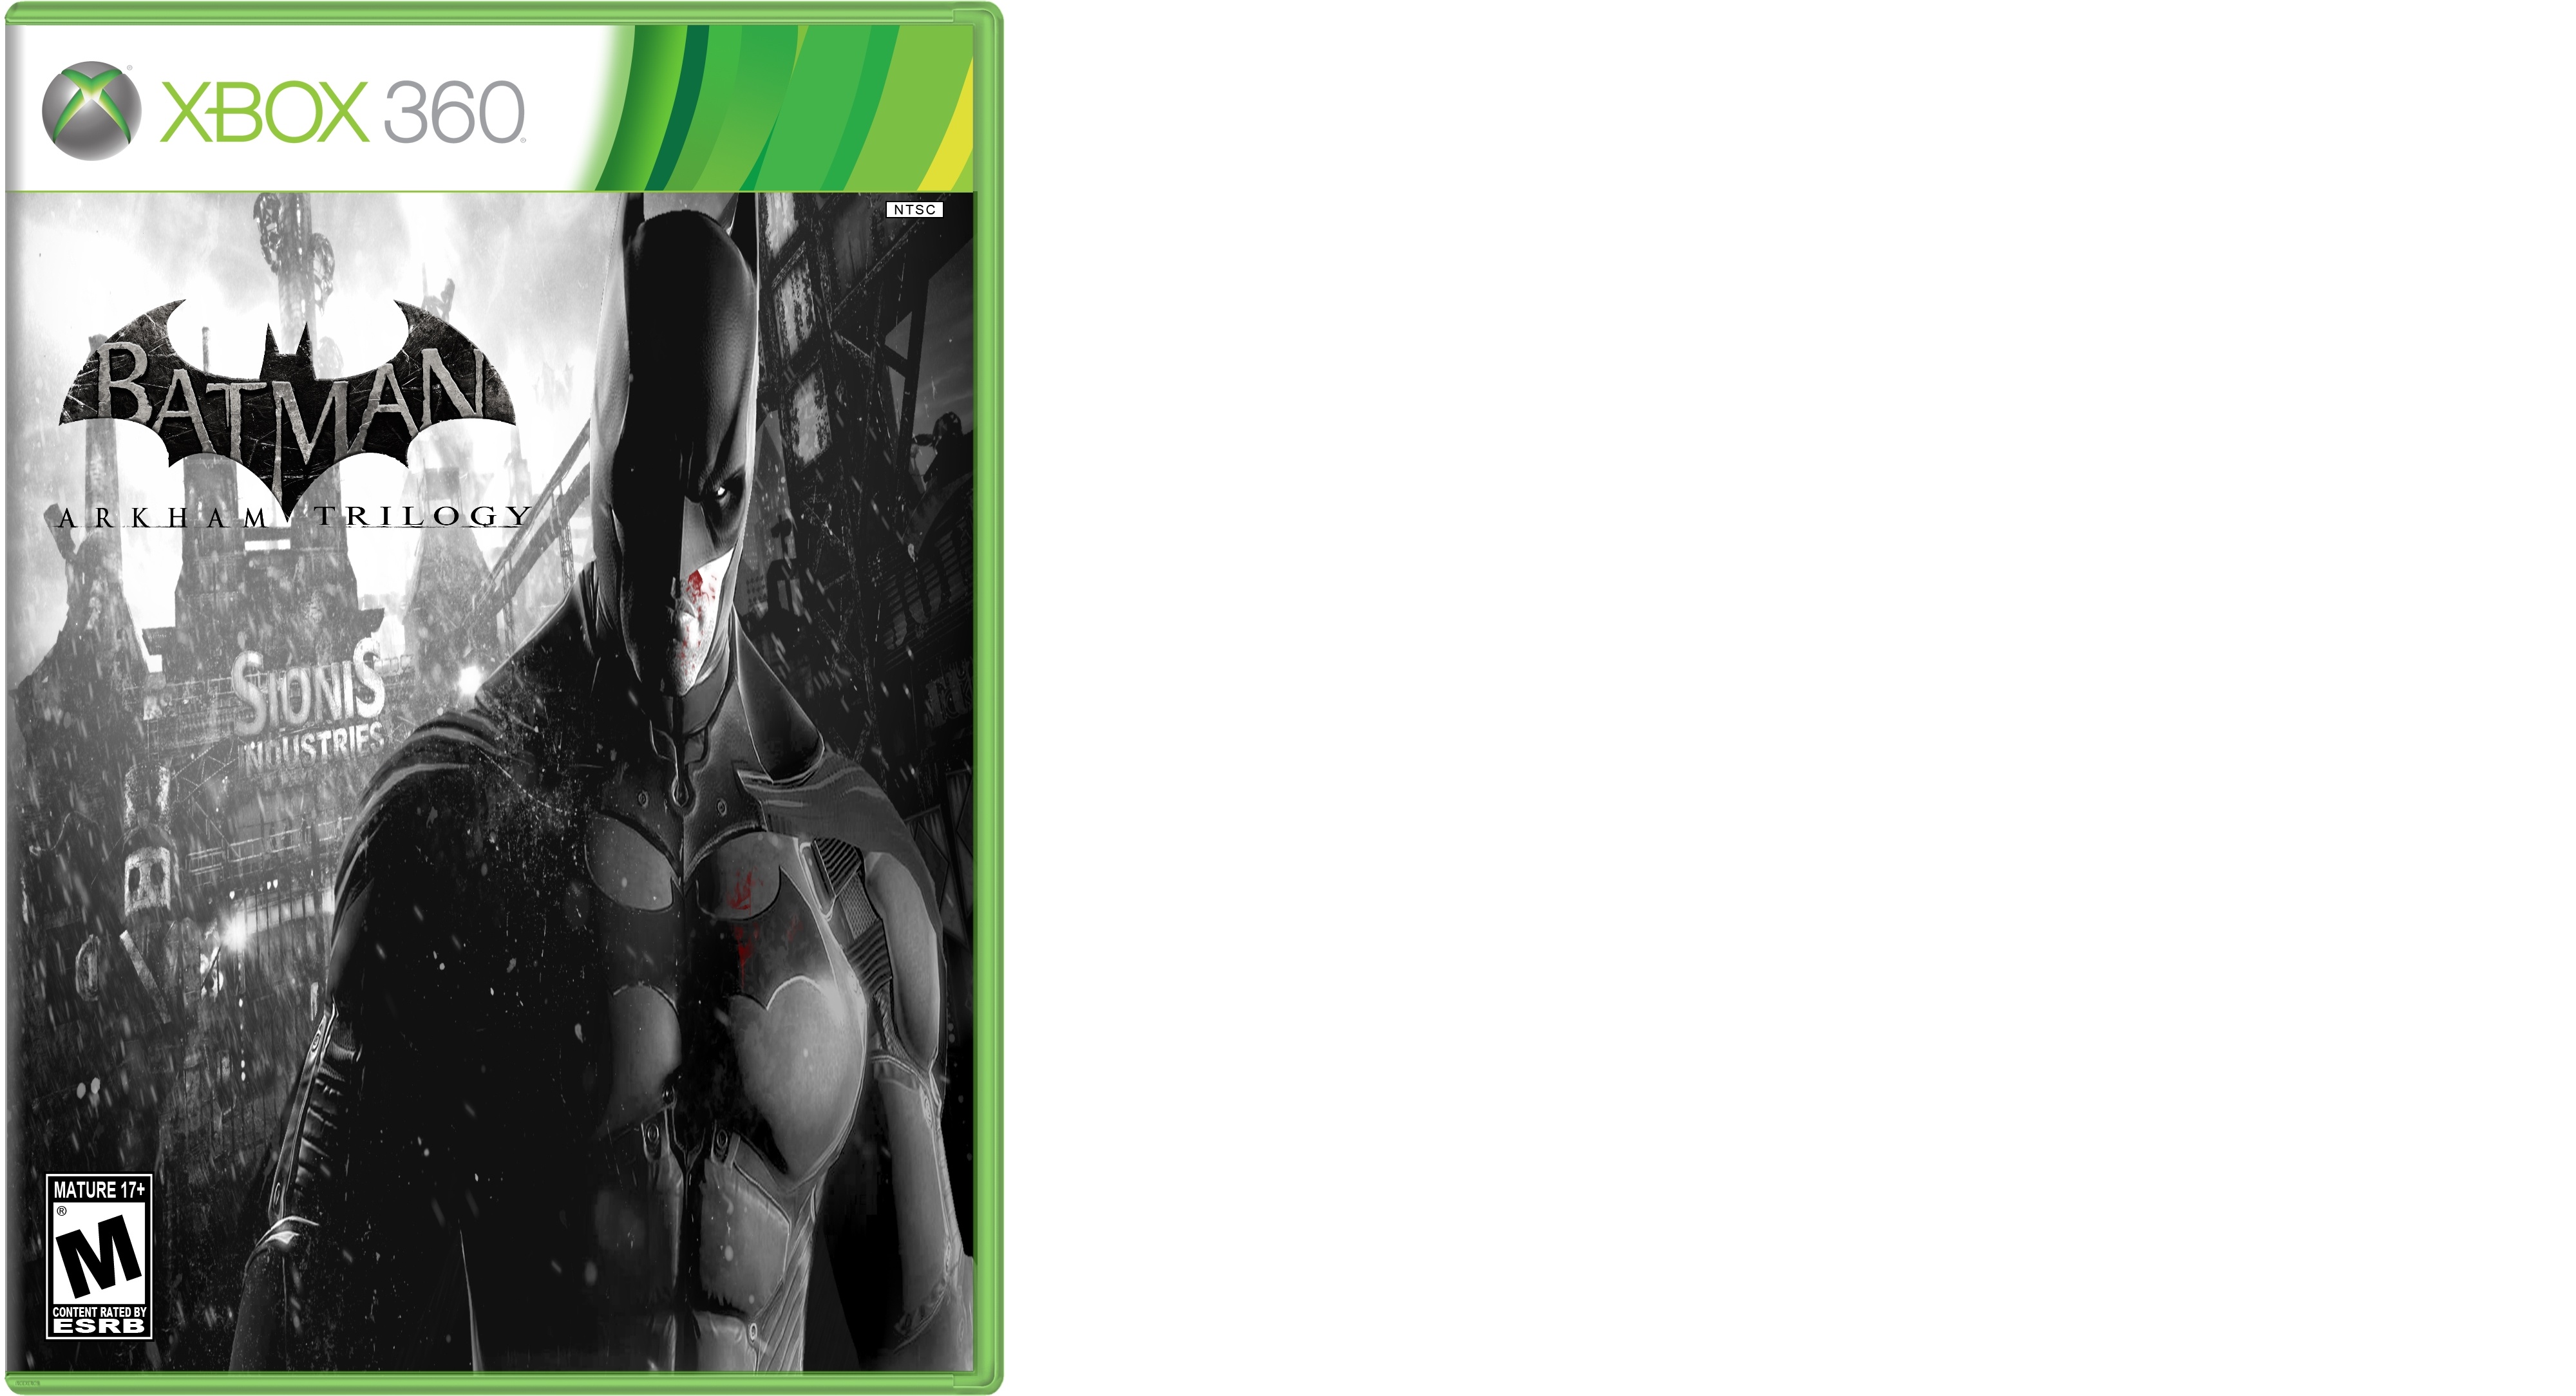 Batman: Arkham Trilogy box cover